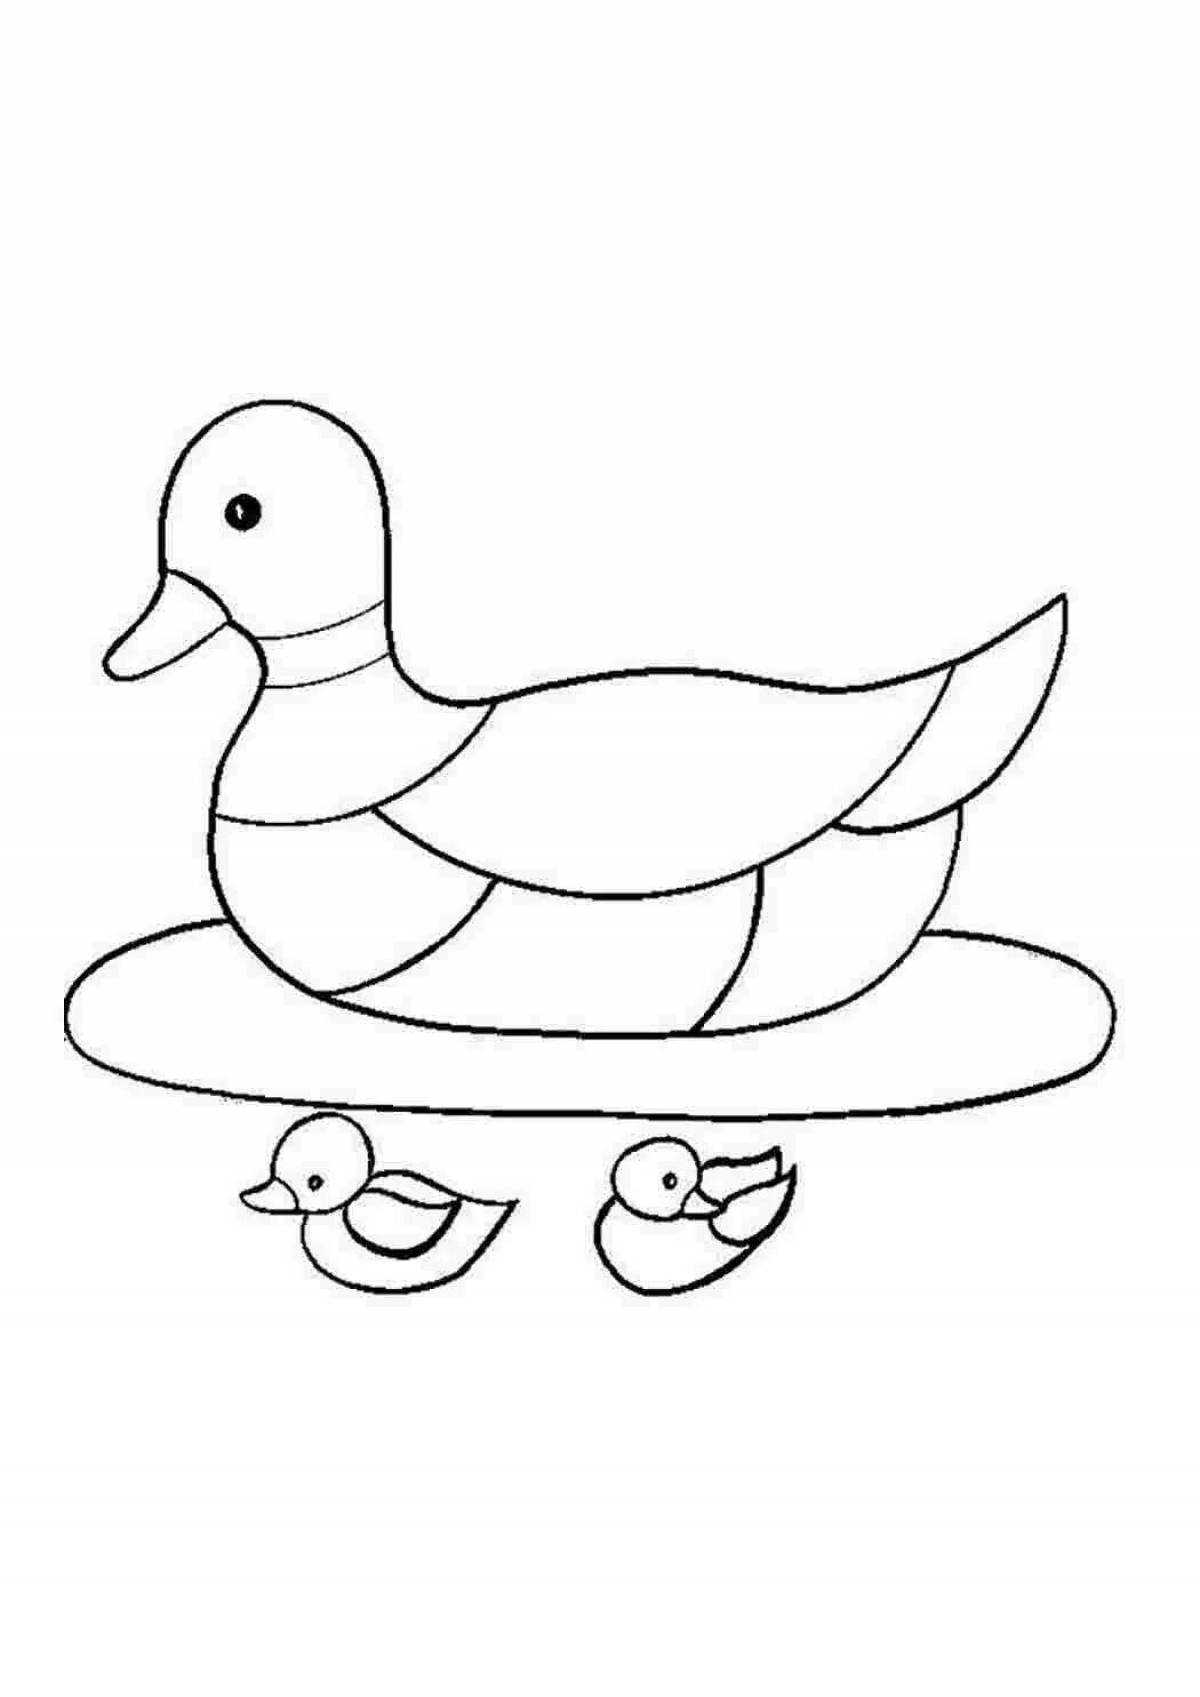 Delightful Dymkovo toy duck coloring book